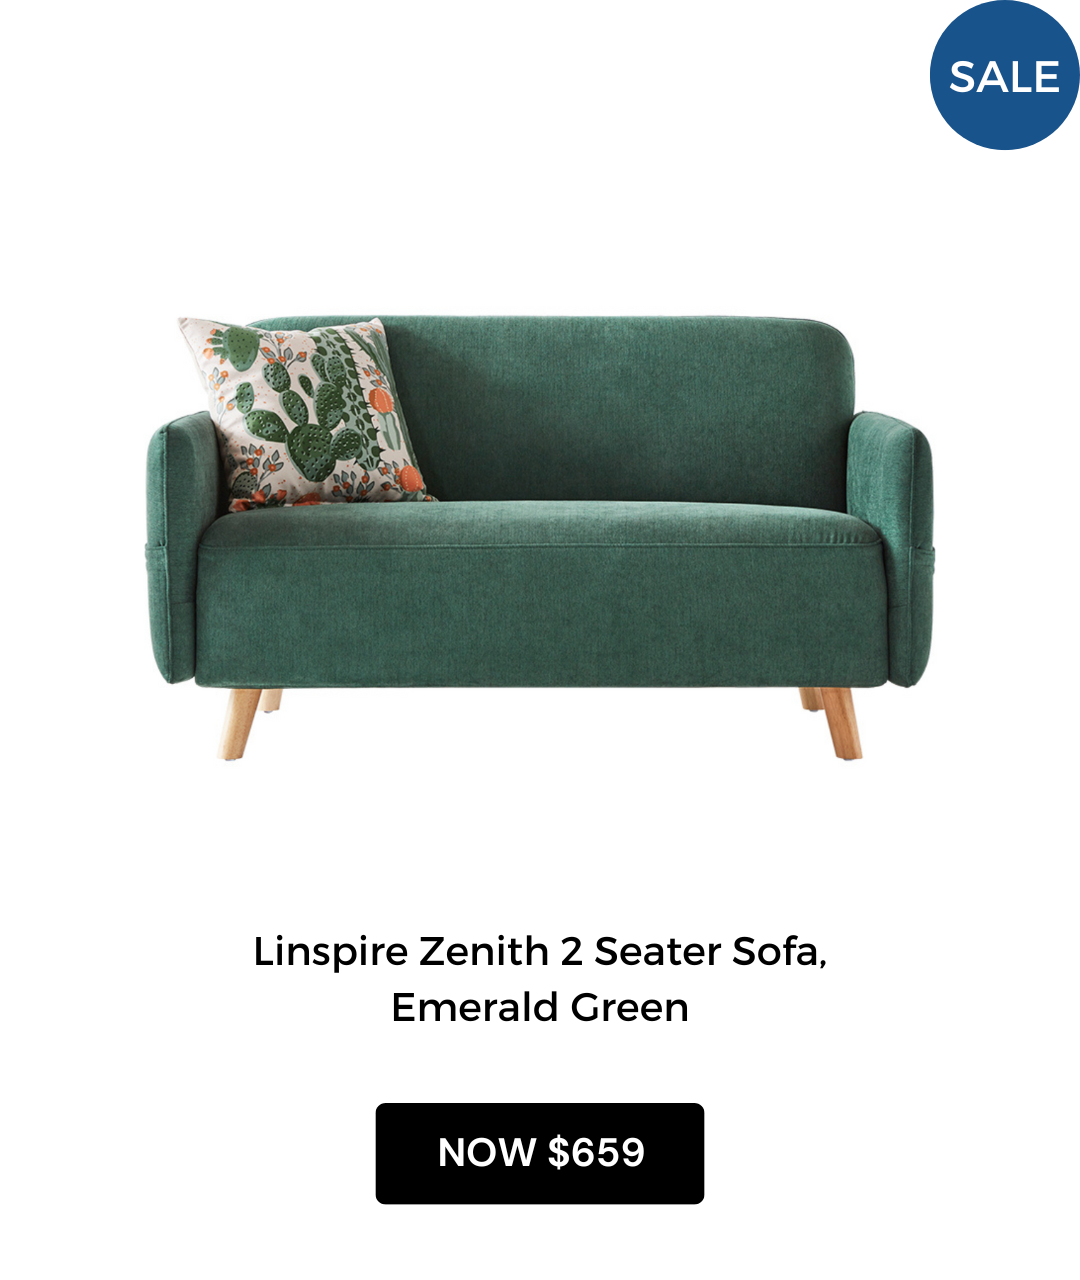 Linspire Zenith 2 Seater Sofa, Emerald Green